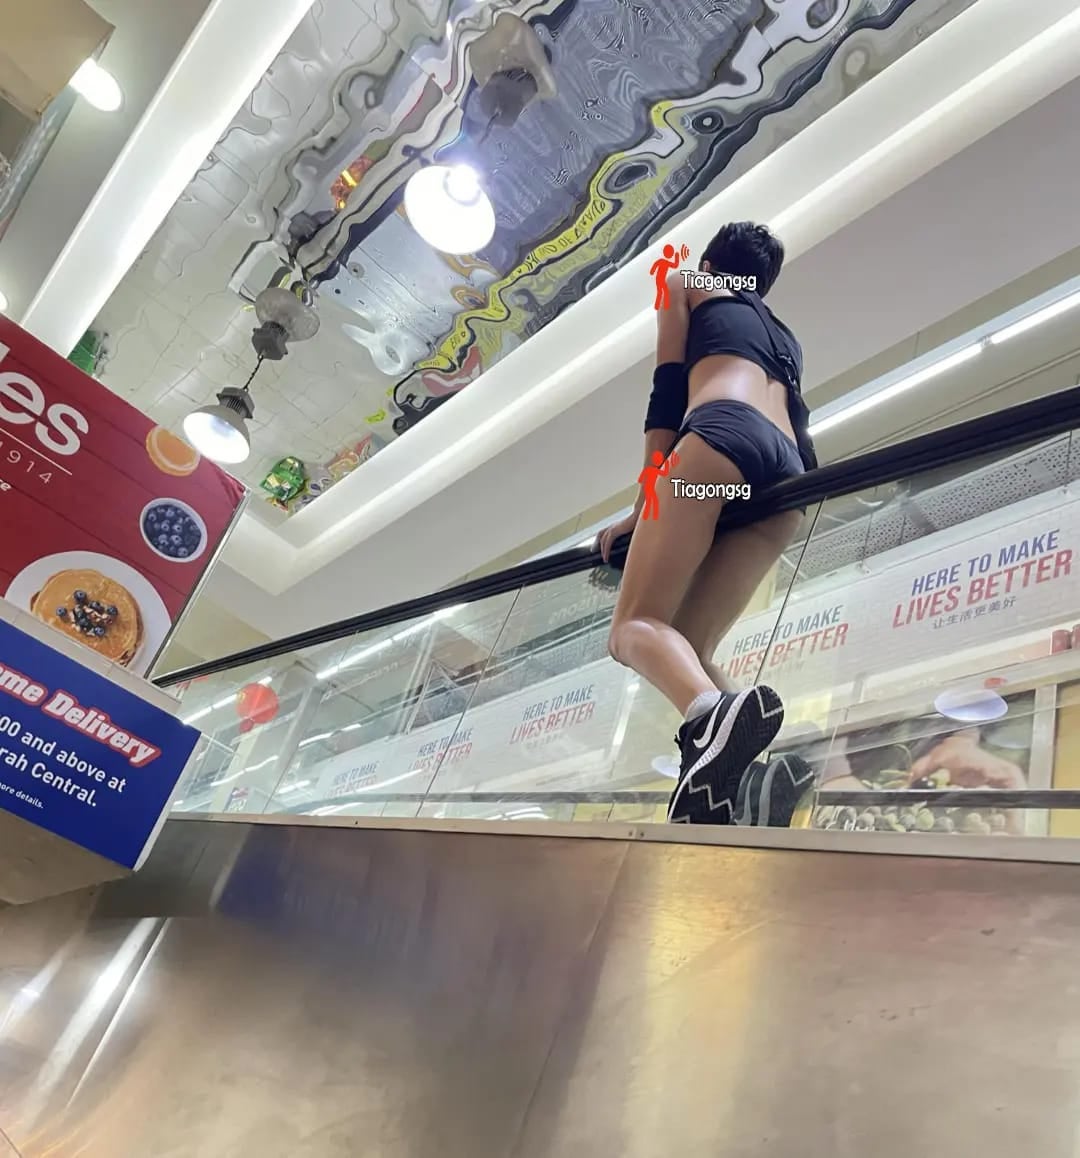 man rides escalator singapore wearing shorts and crop top 2